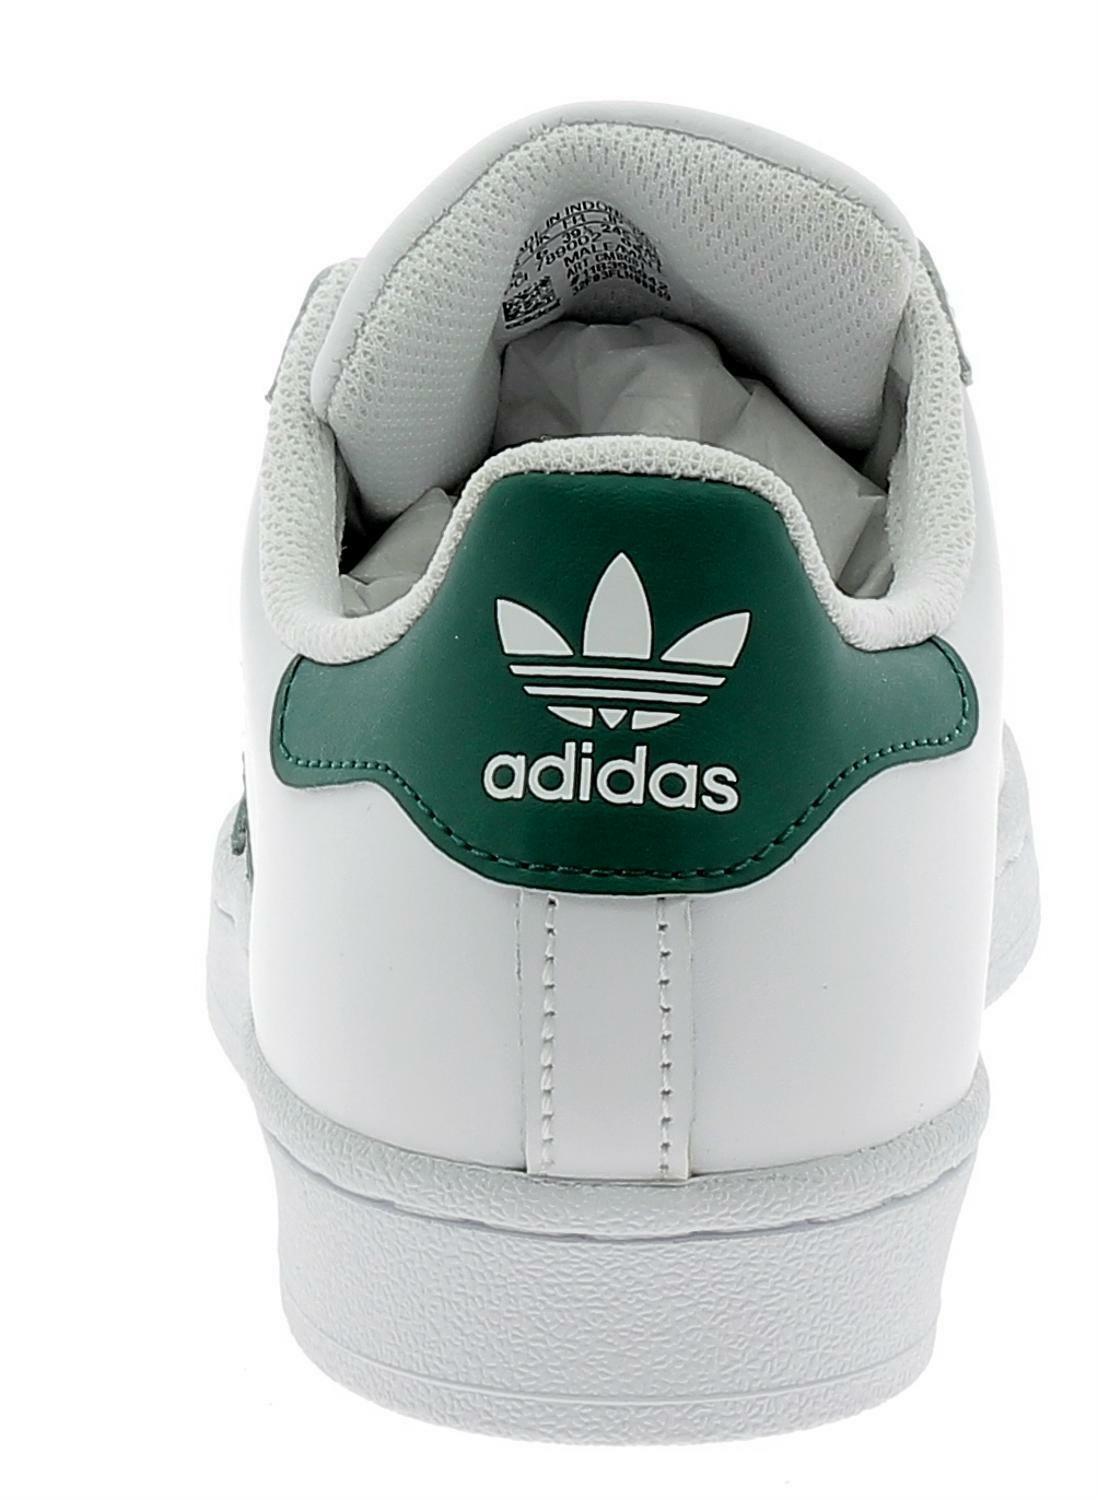 adidas adidas superstar scarpe sportive pelle bianche verdi